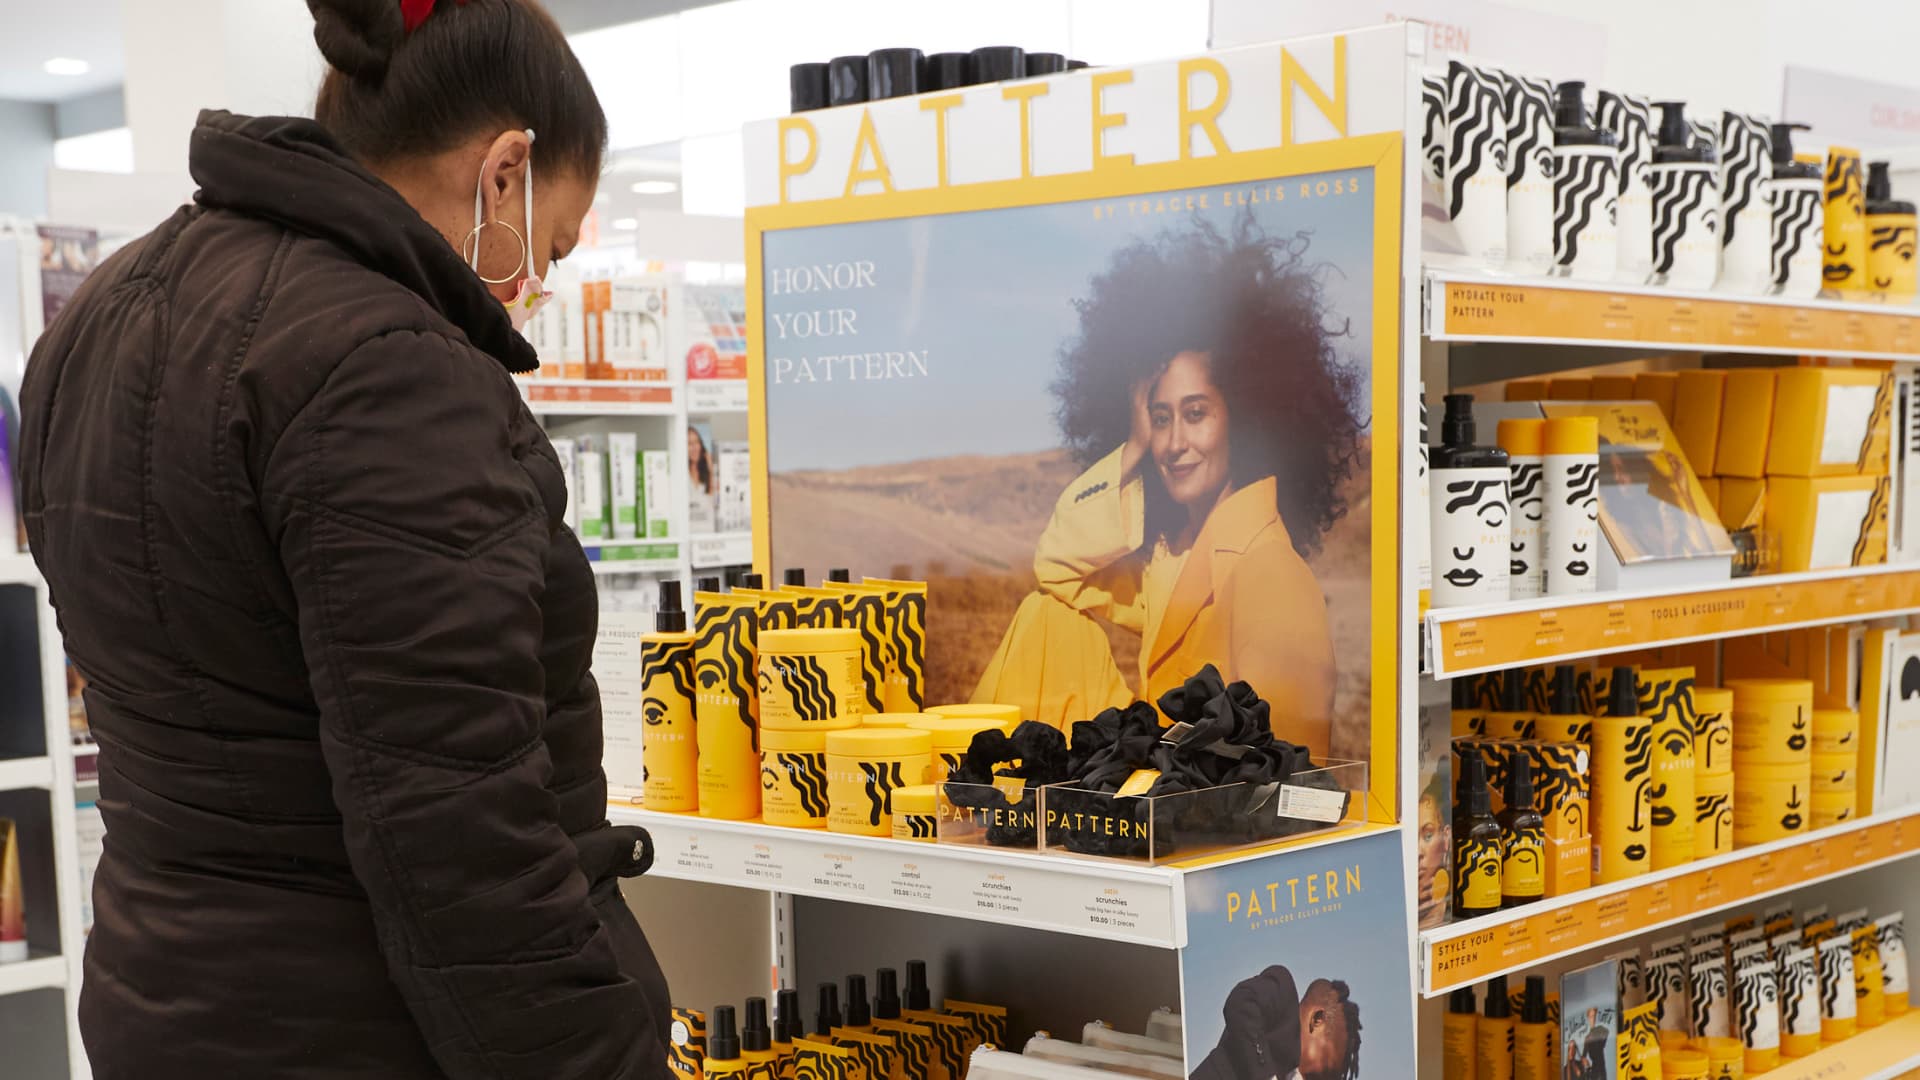 Major retailers boost Black female entrepreneurship as employment gap lingers